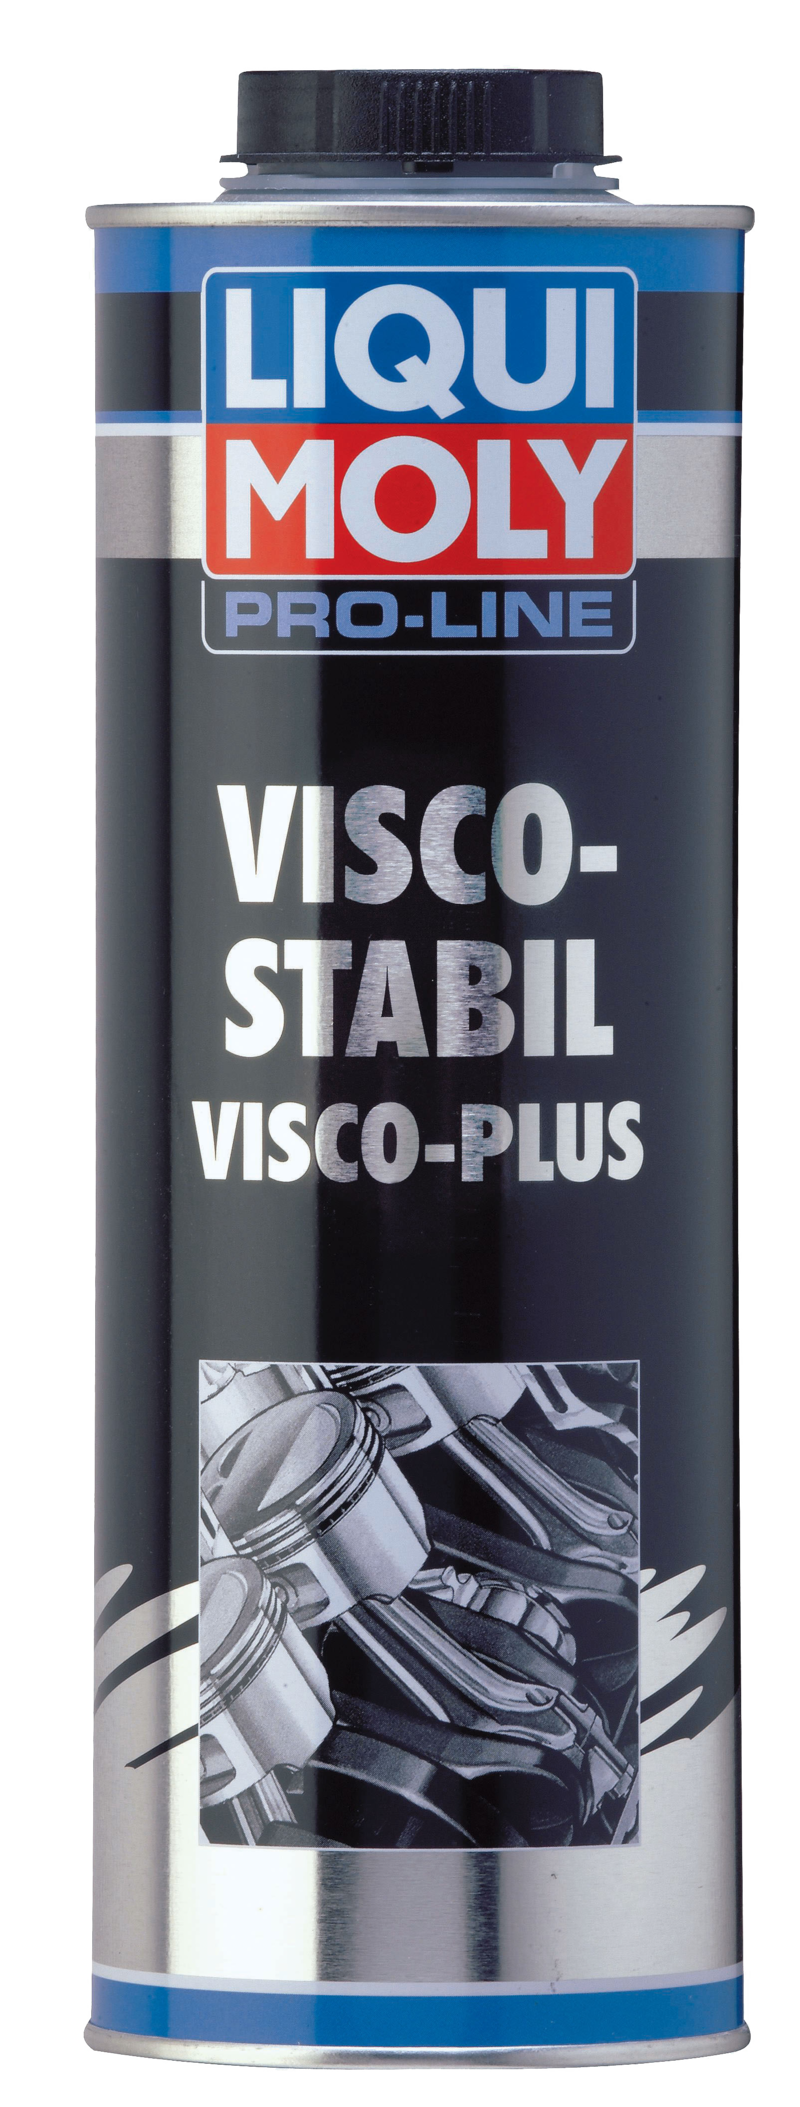 Pro-Line Visco-Plus (1 L) Liqui Moly